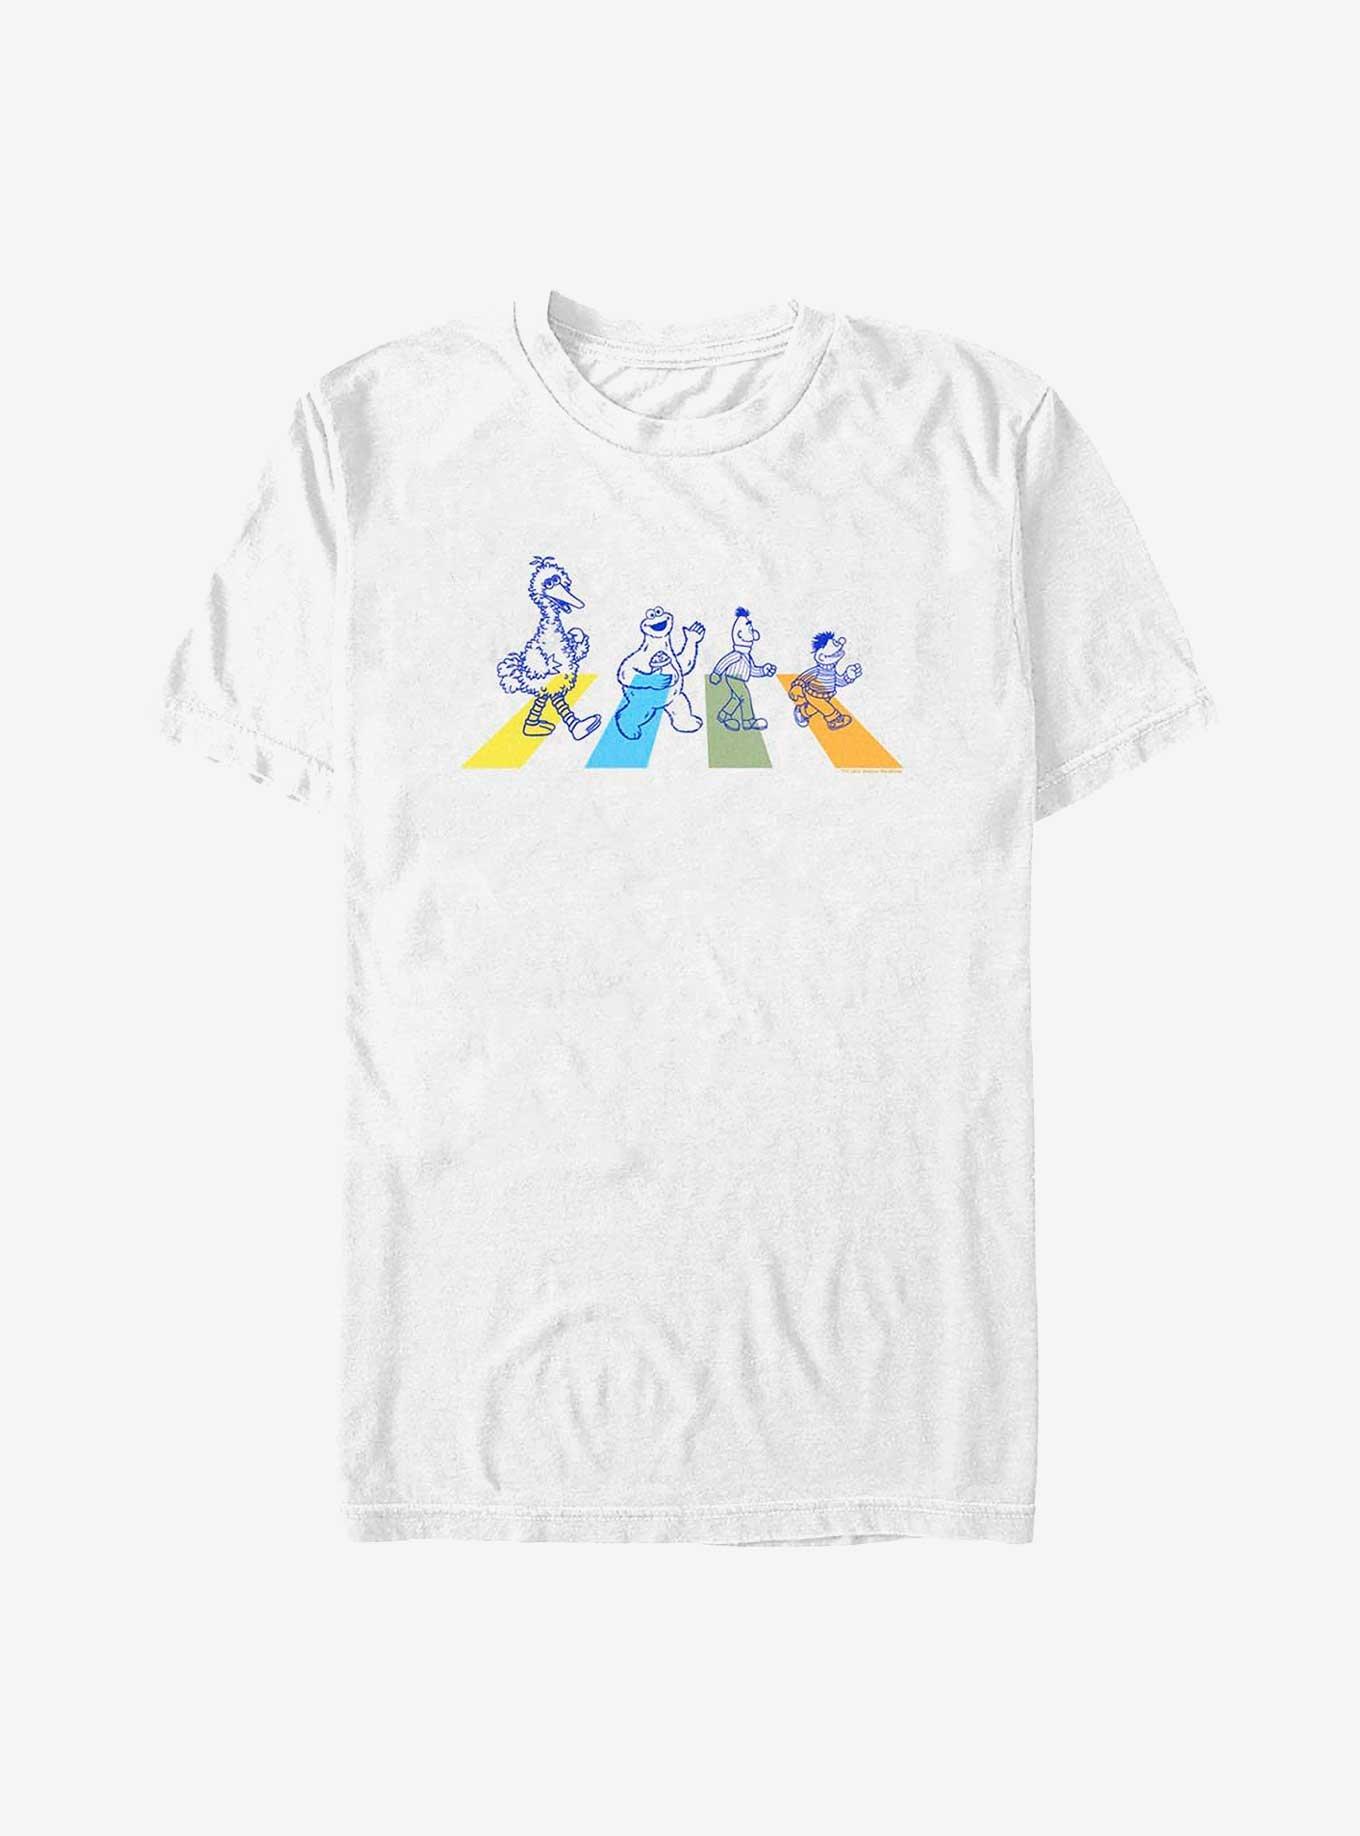 Sesame Street Team Abbey Road T-Shirt, WHITE, hi-res